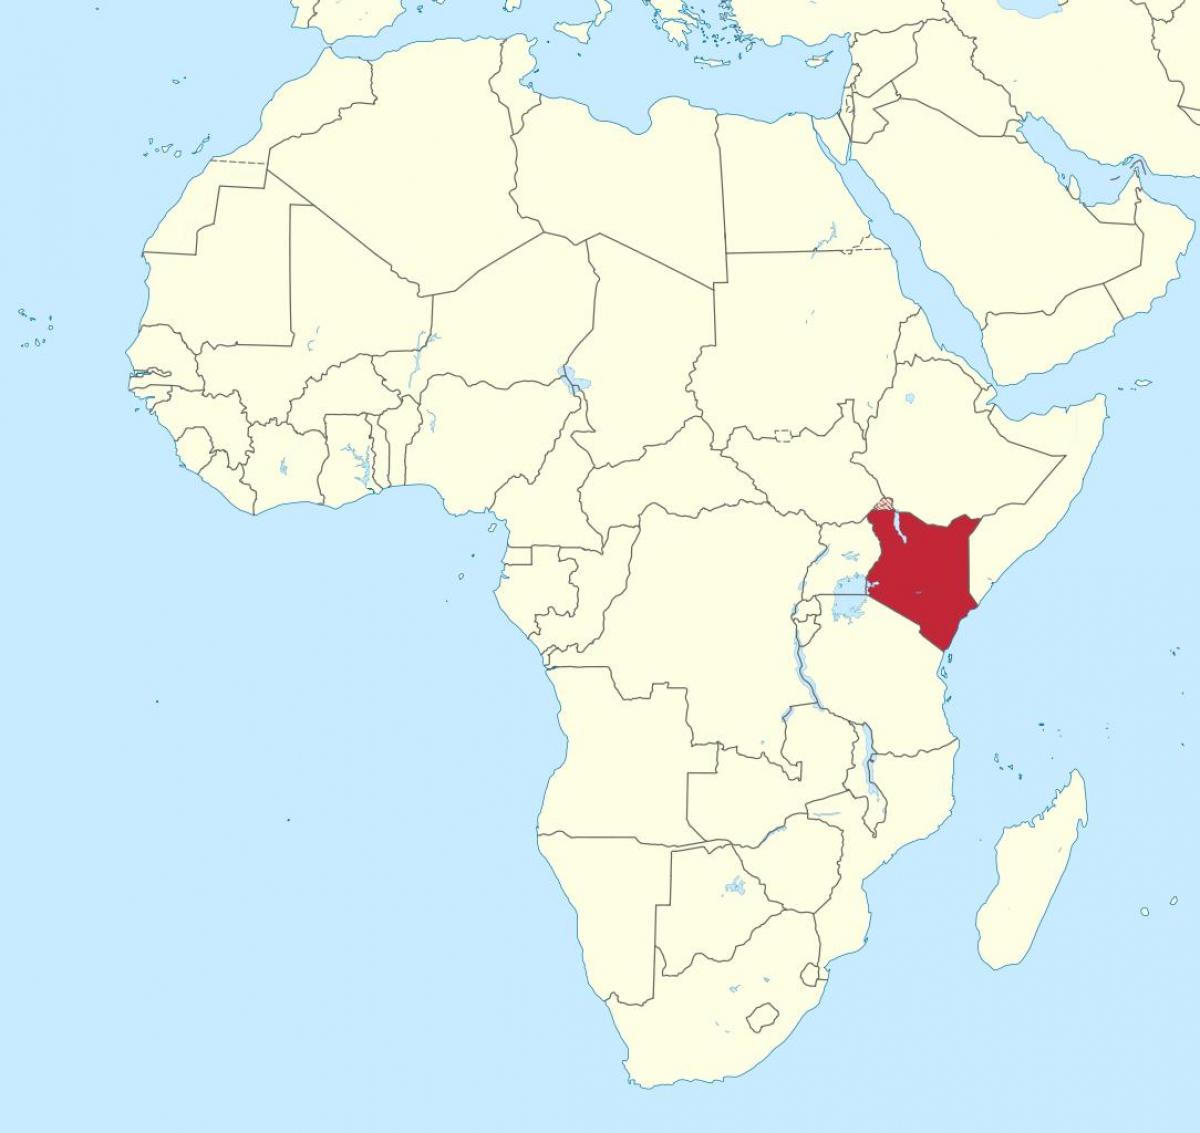 kart over afrika som viser Kenya